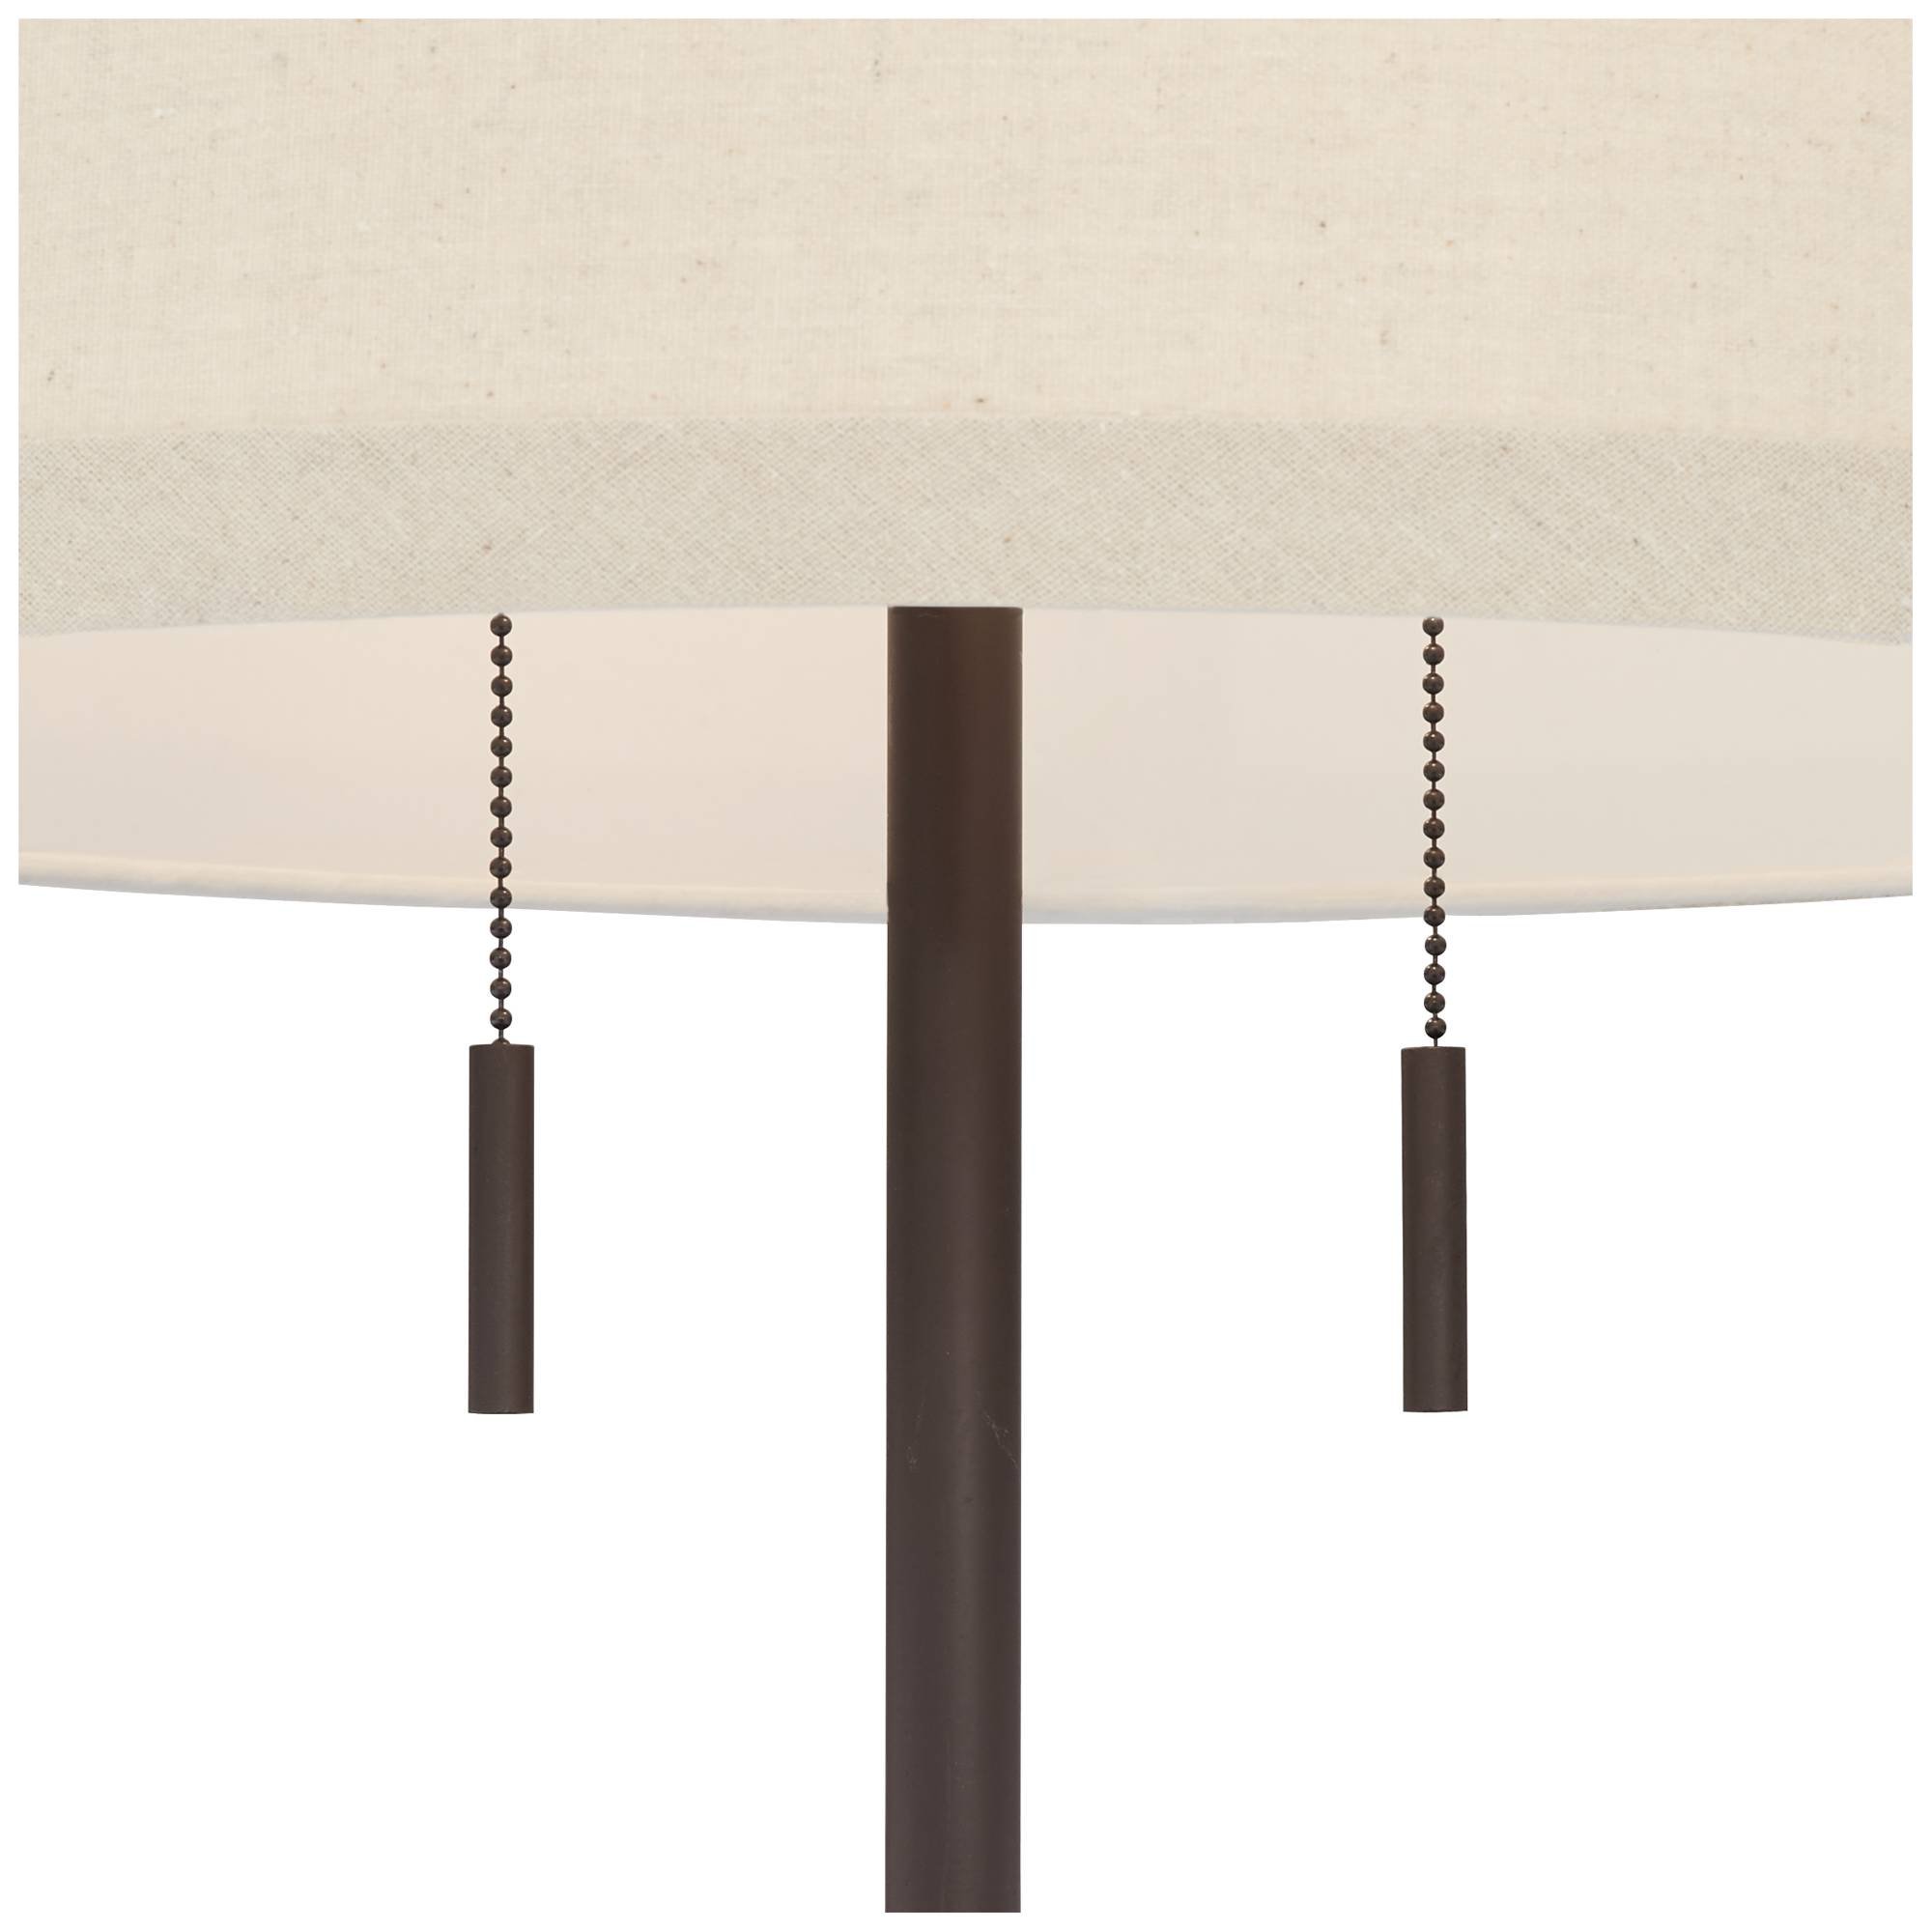 Possini Euro Design Nayla Modern Floor Lamp Standing 62.5" Tall Bronze Steel Slender Column Off White Fabric Tapered Drum Shade Decor for Living Room Reading House Bedroom Home